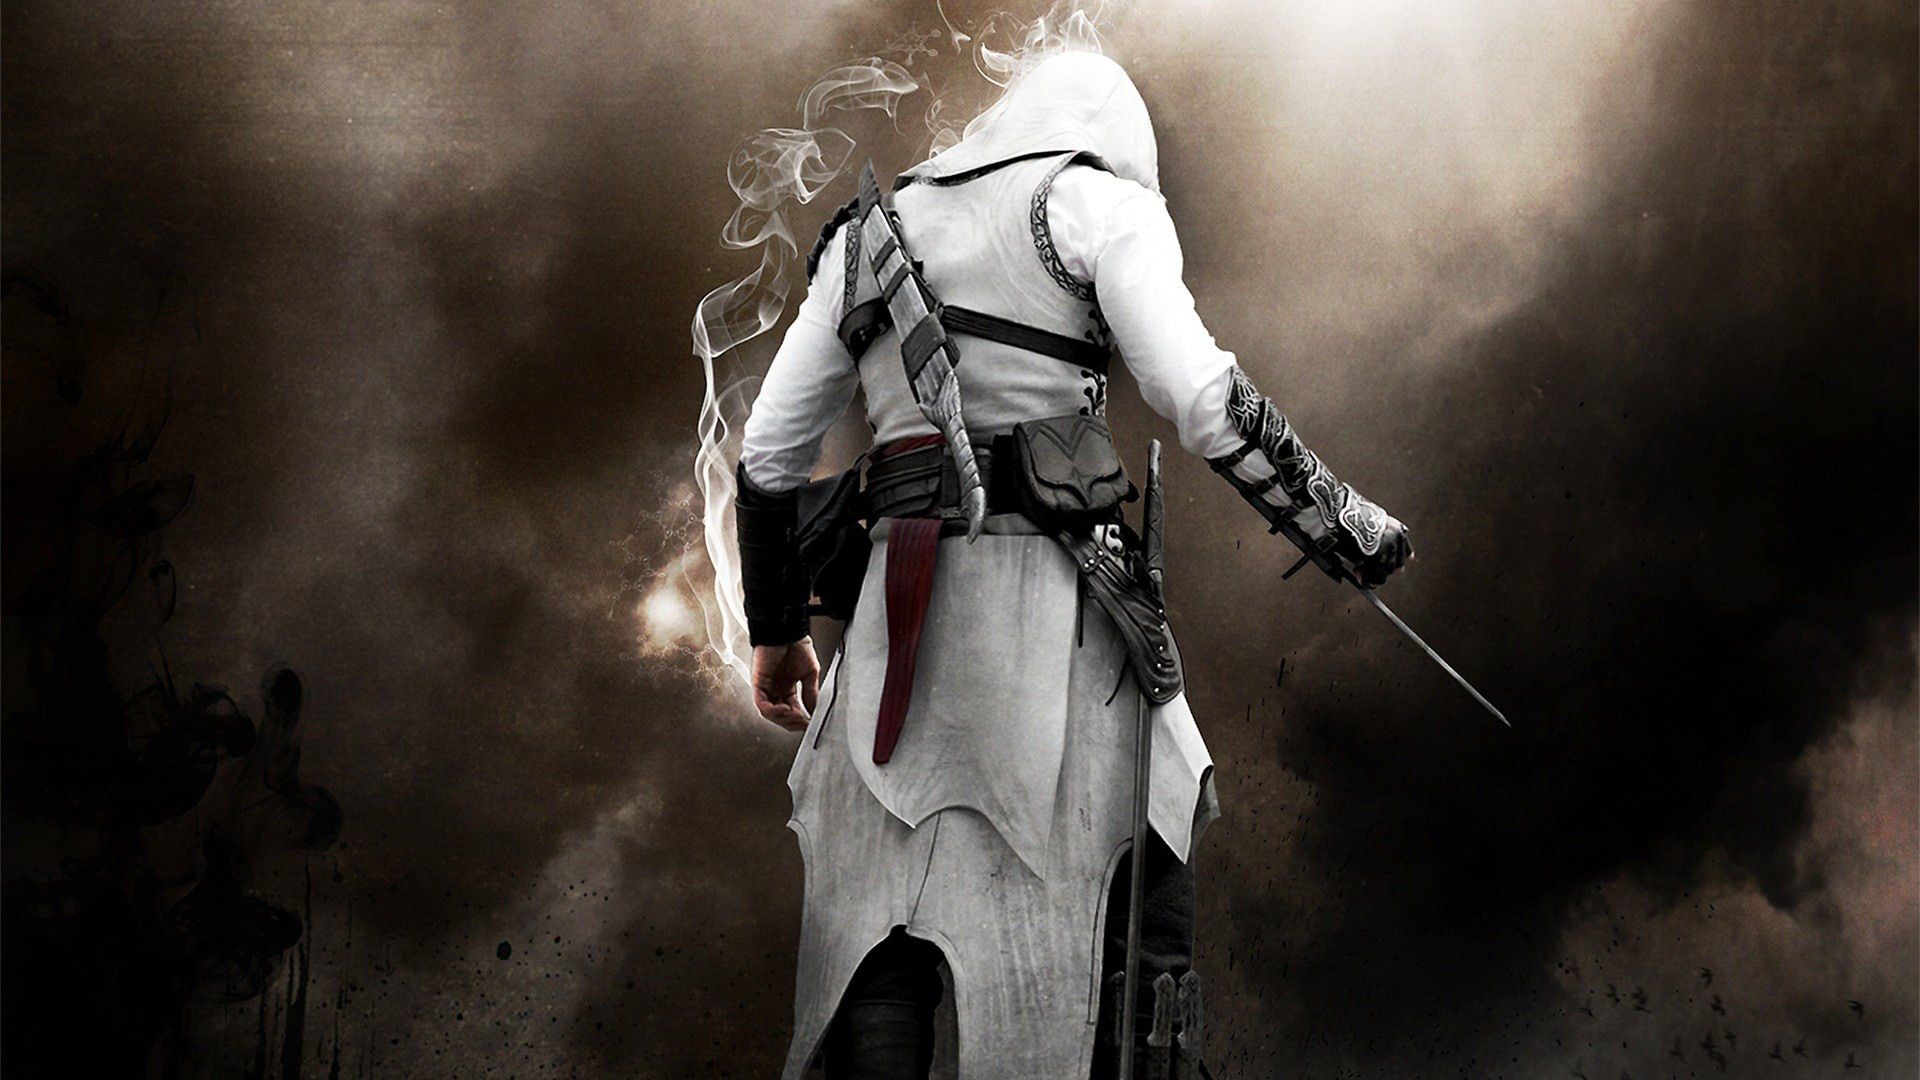 32+] Assassin's Creed HD Wallpapers - WallpaperSafari